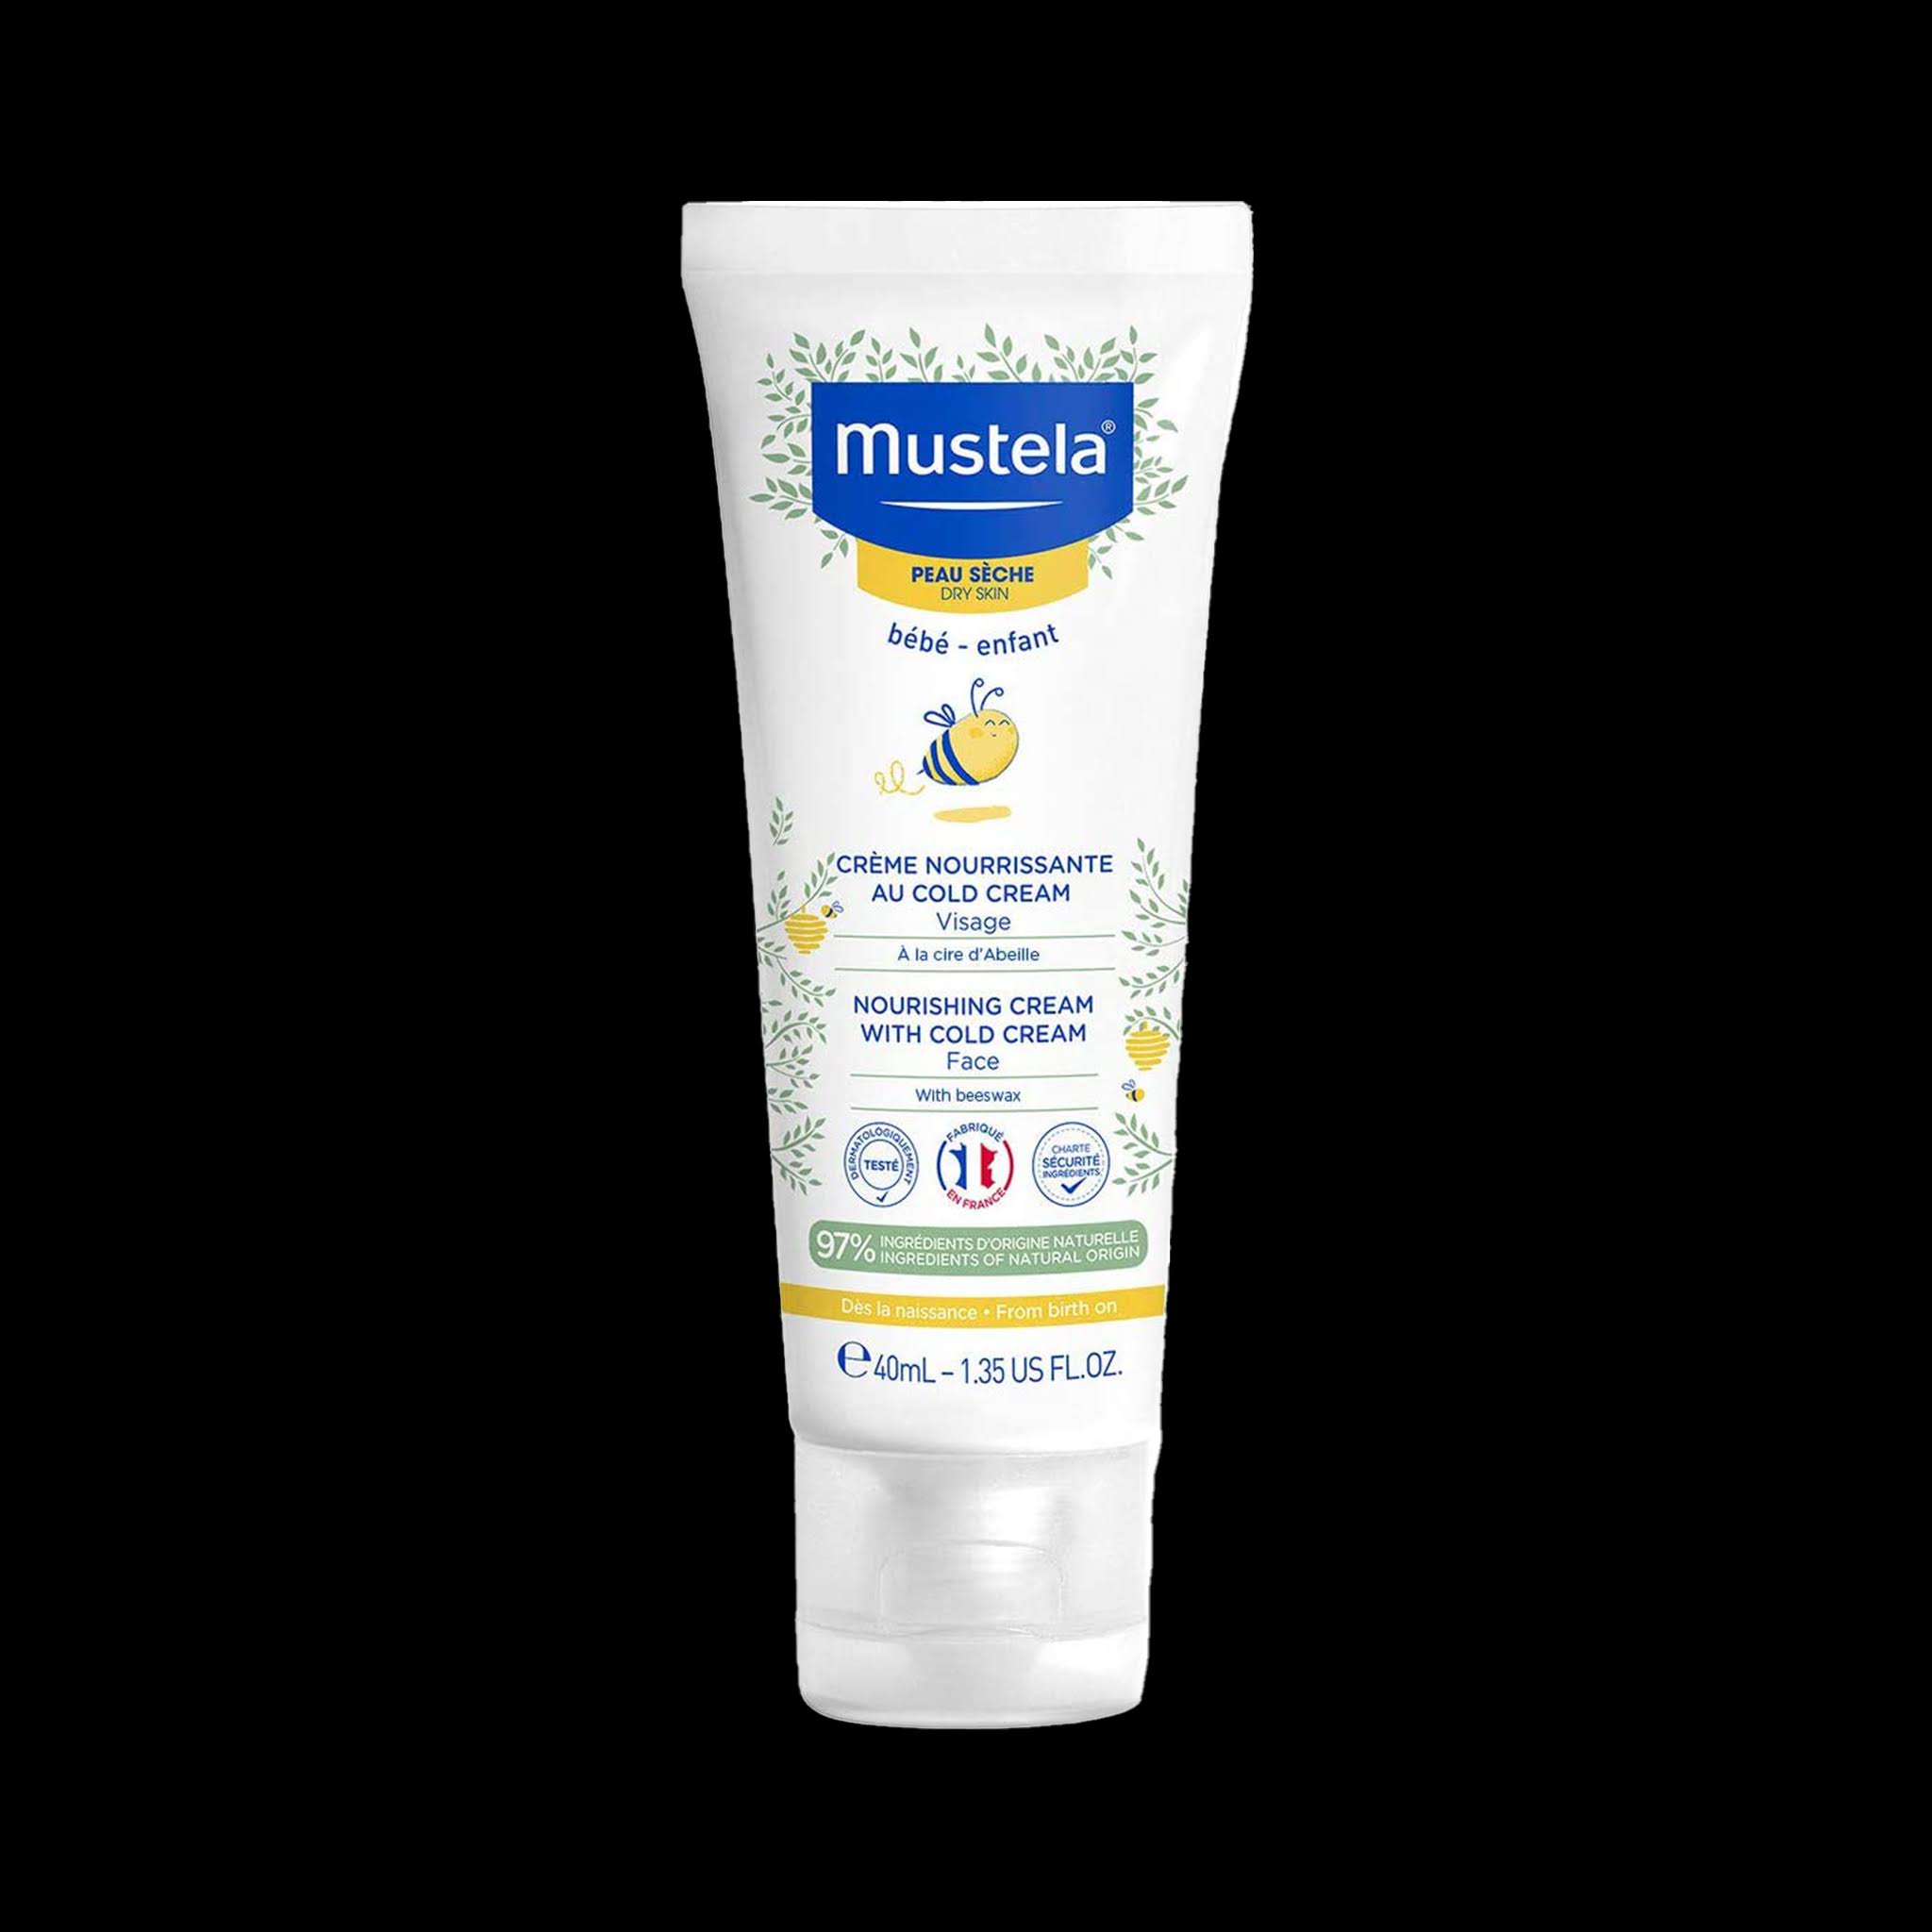 Mustela Nourishing Cream with Cold Cream. Dry Skin Face. 1.35 fl.oz